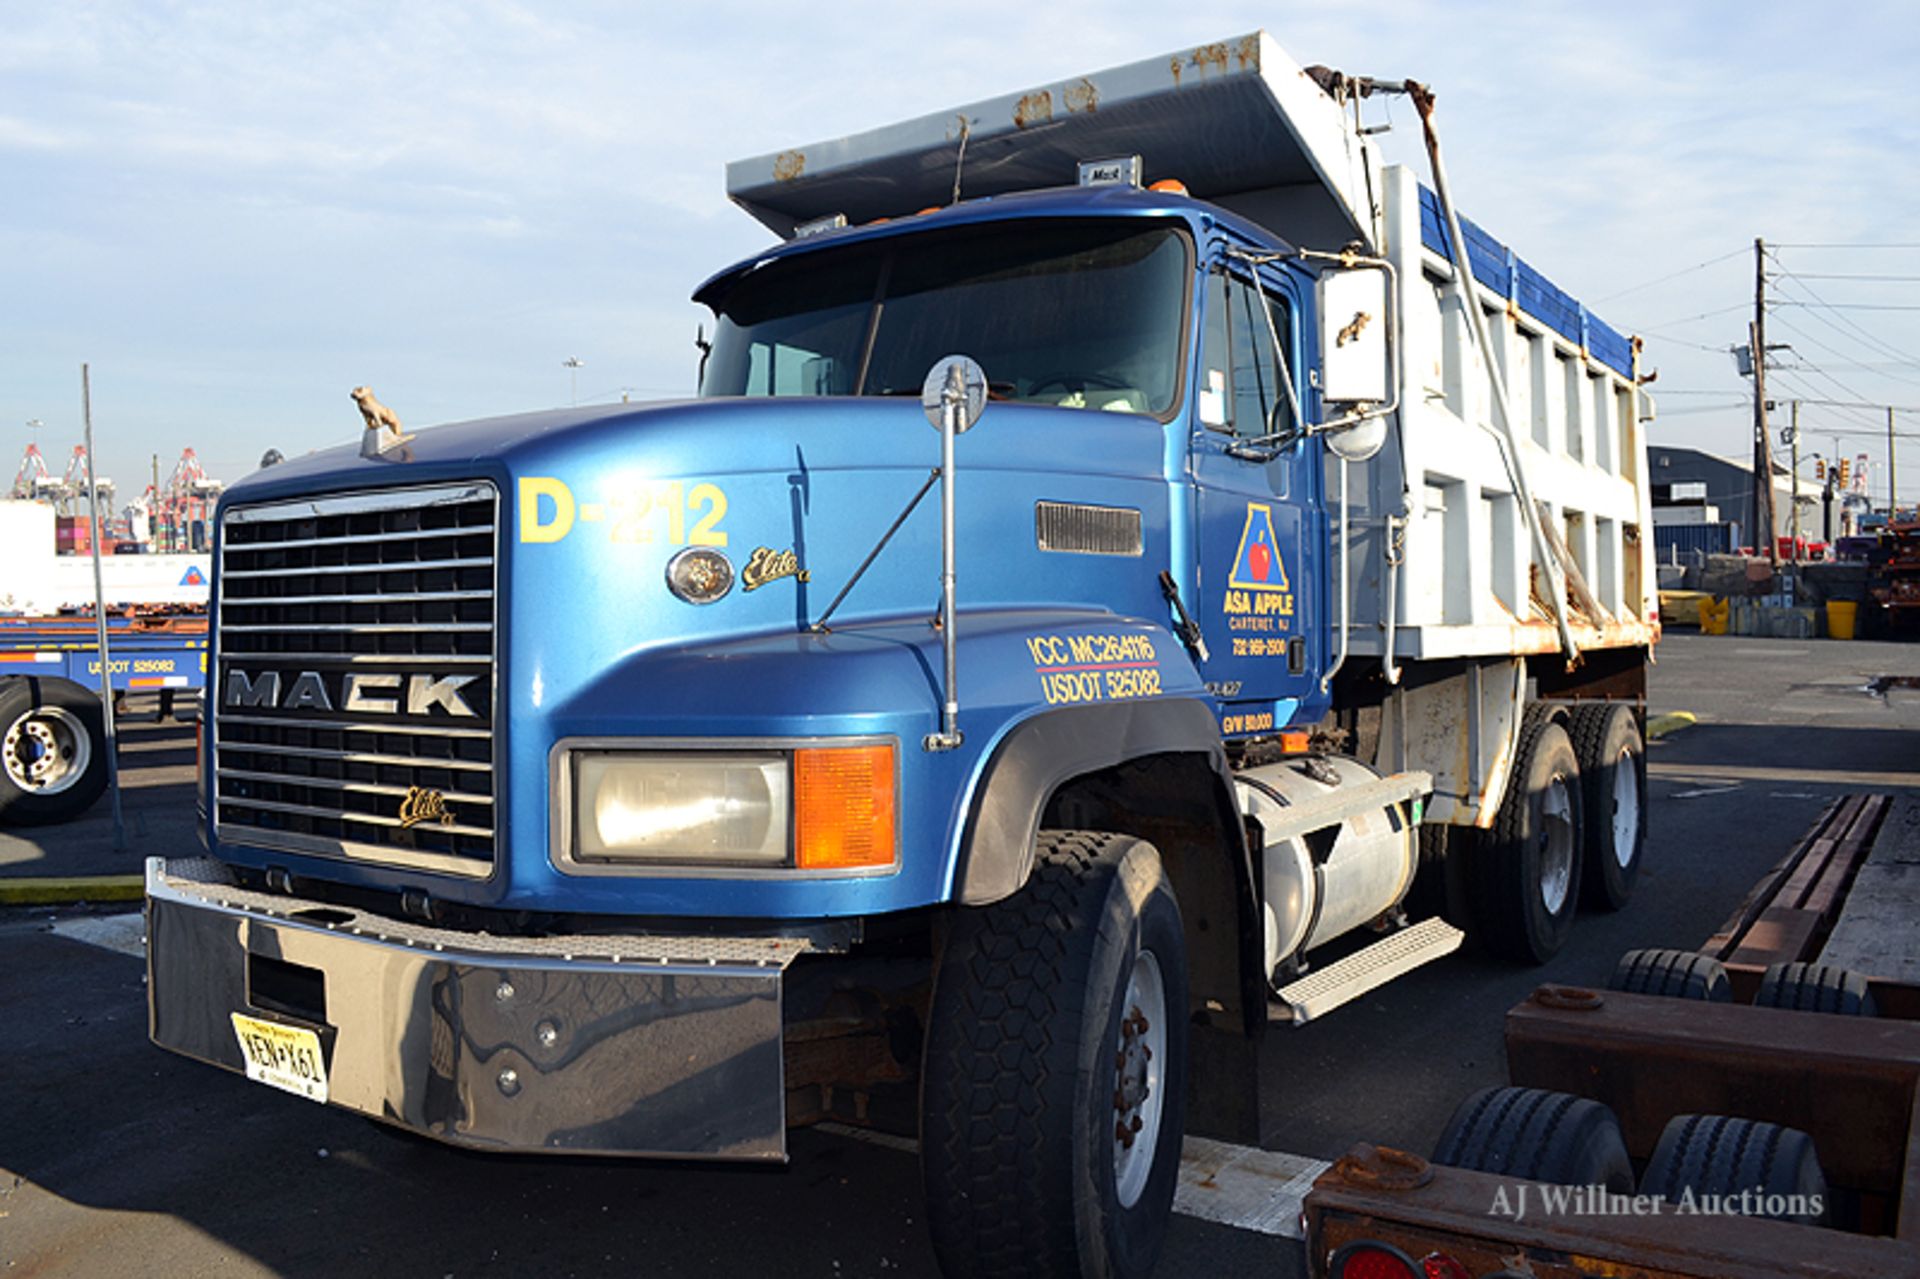 1996 Mack Elite CL-713 tandem axle dump truck